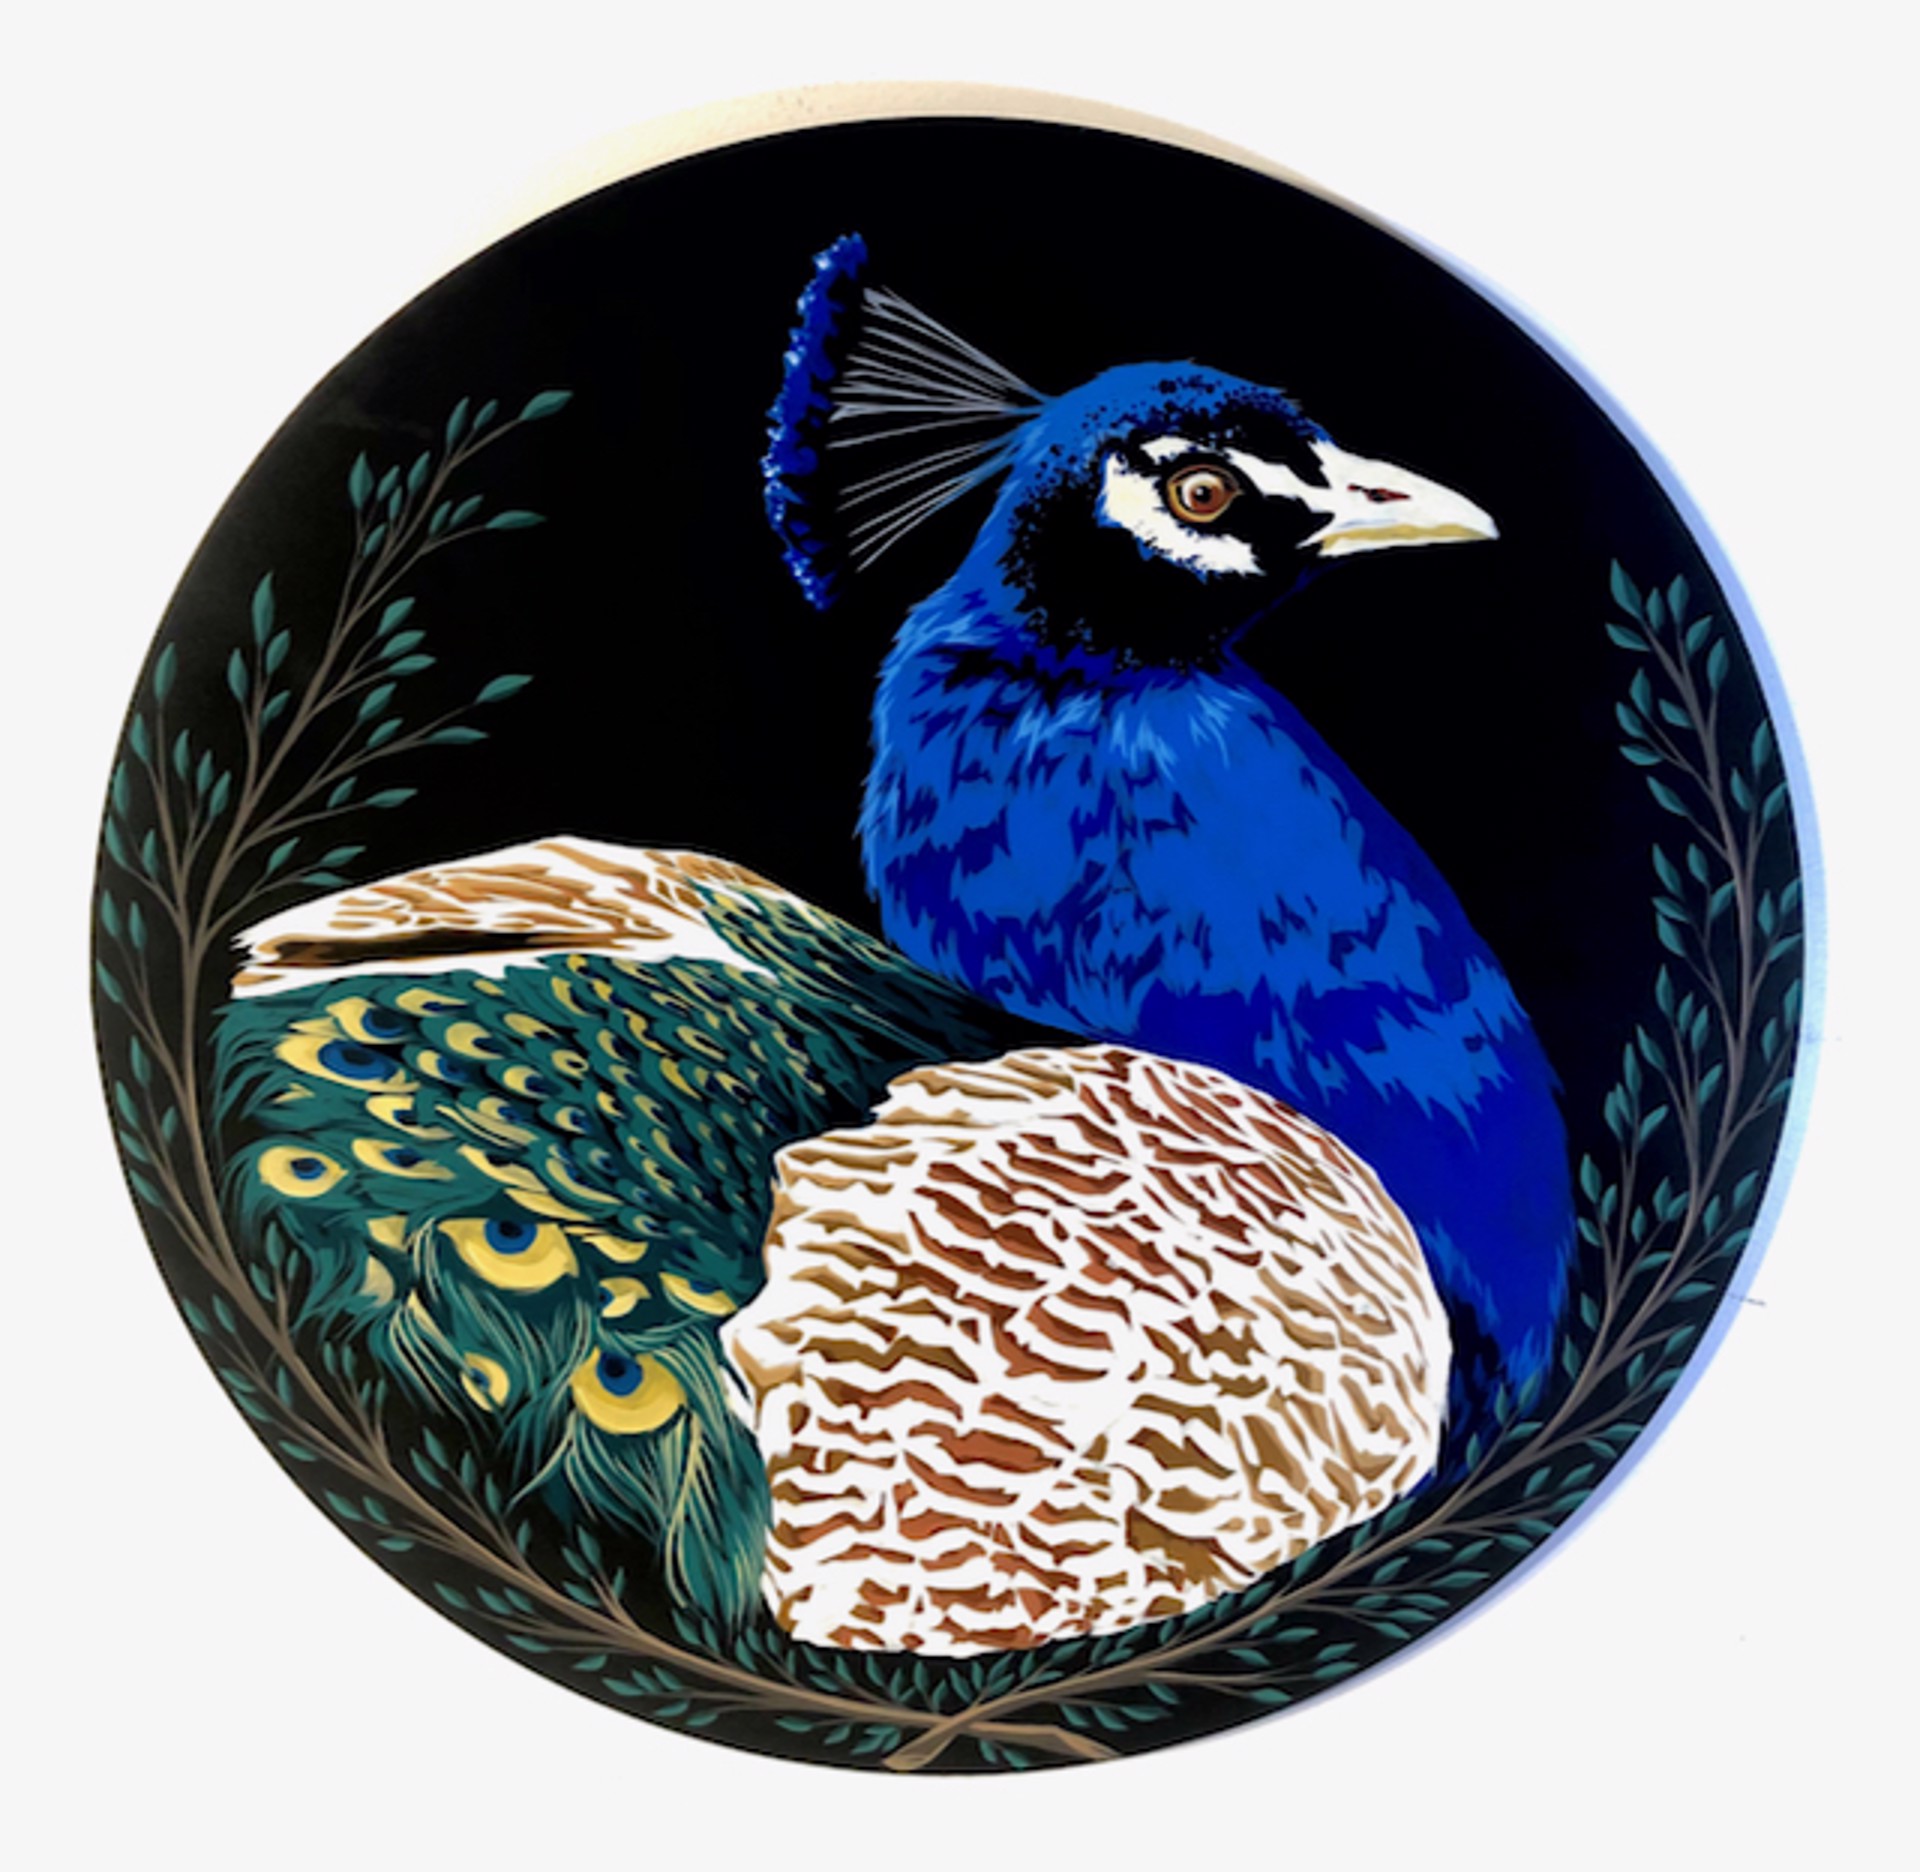 Peacock by HEATHER MILLAR